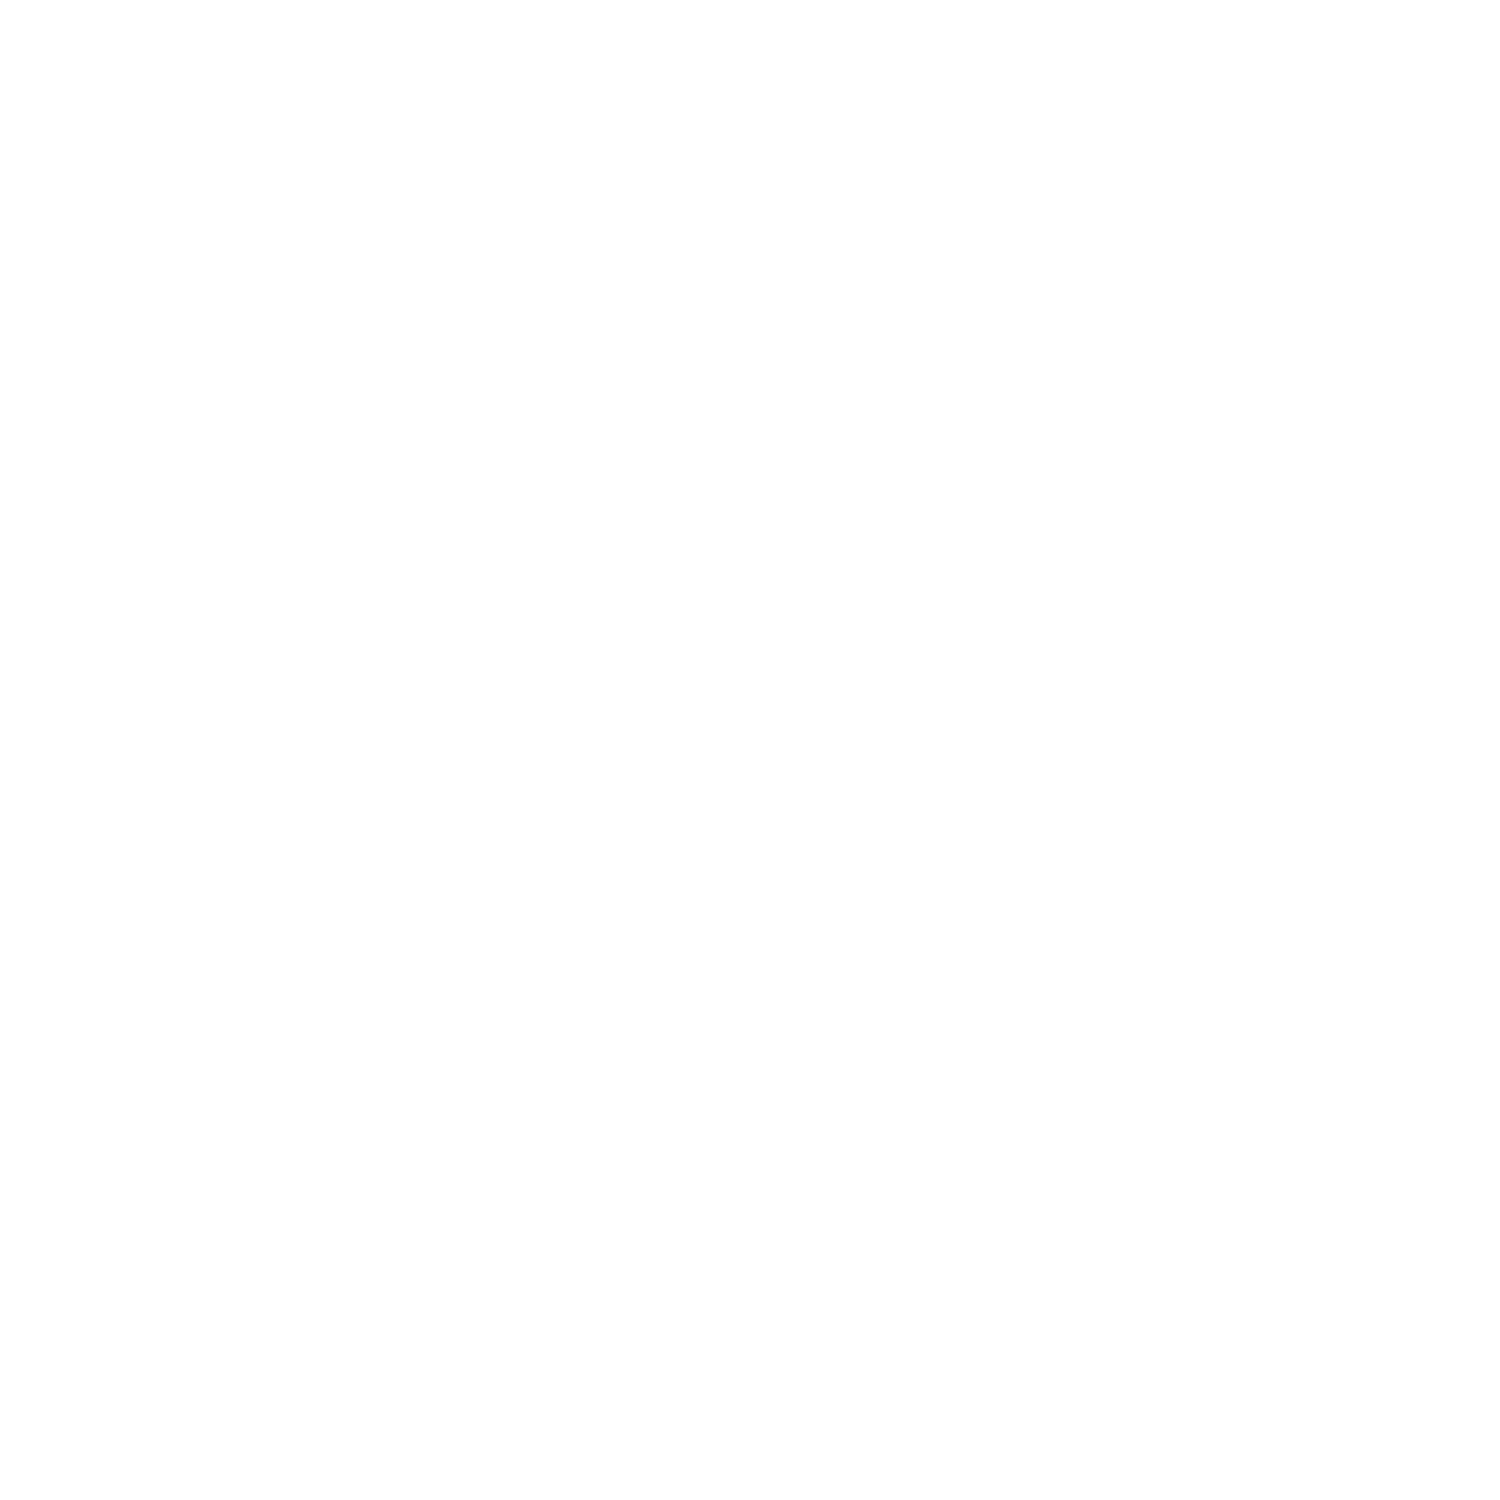 Motley Crew Crossfit